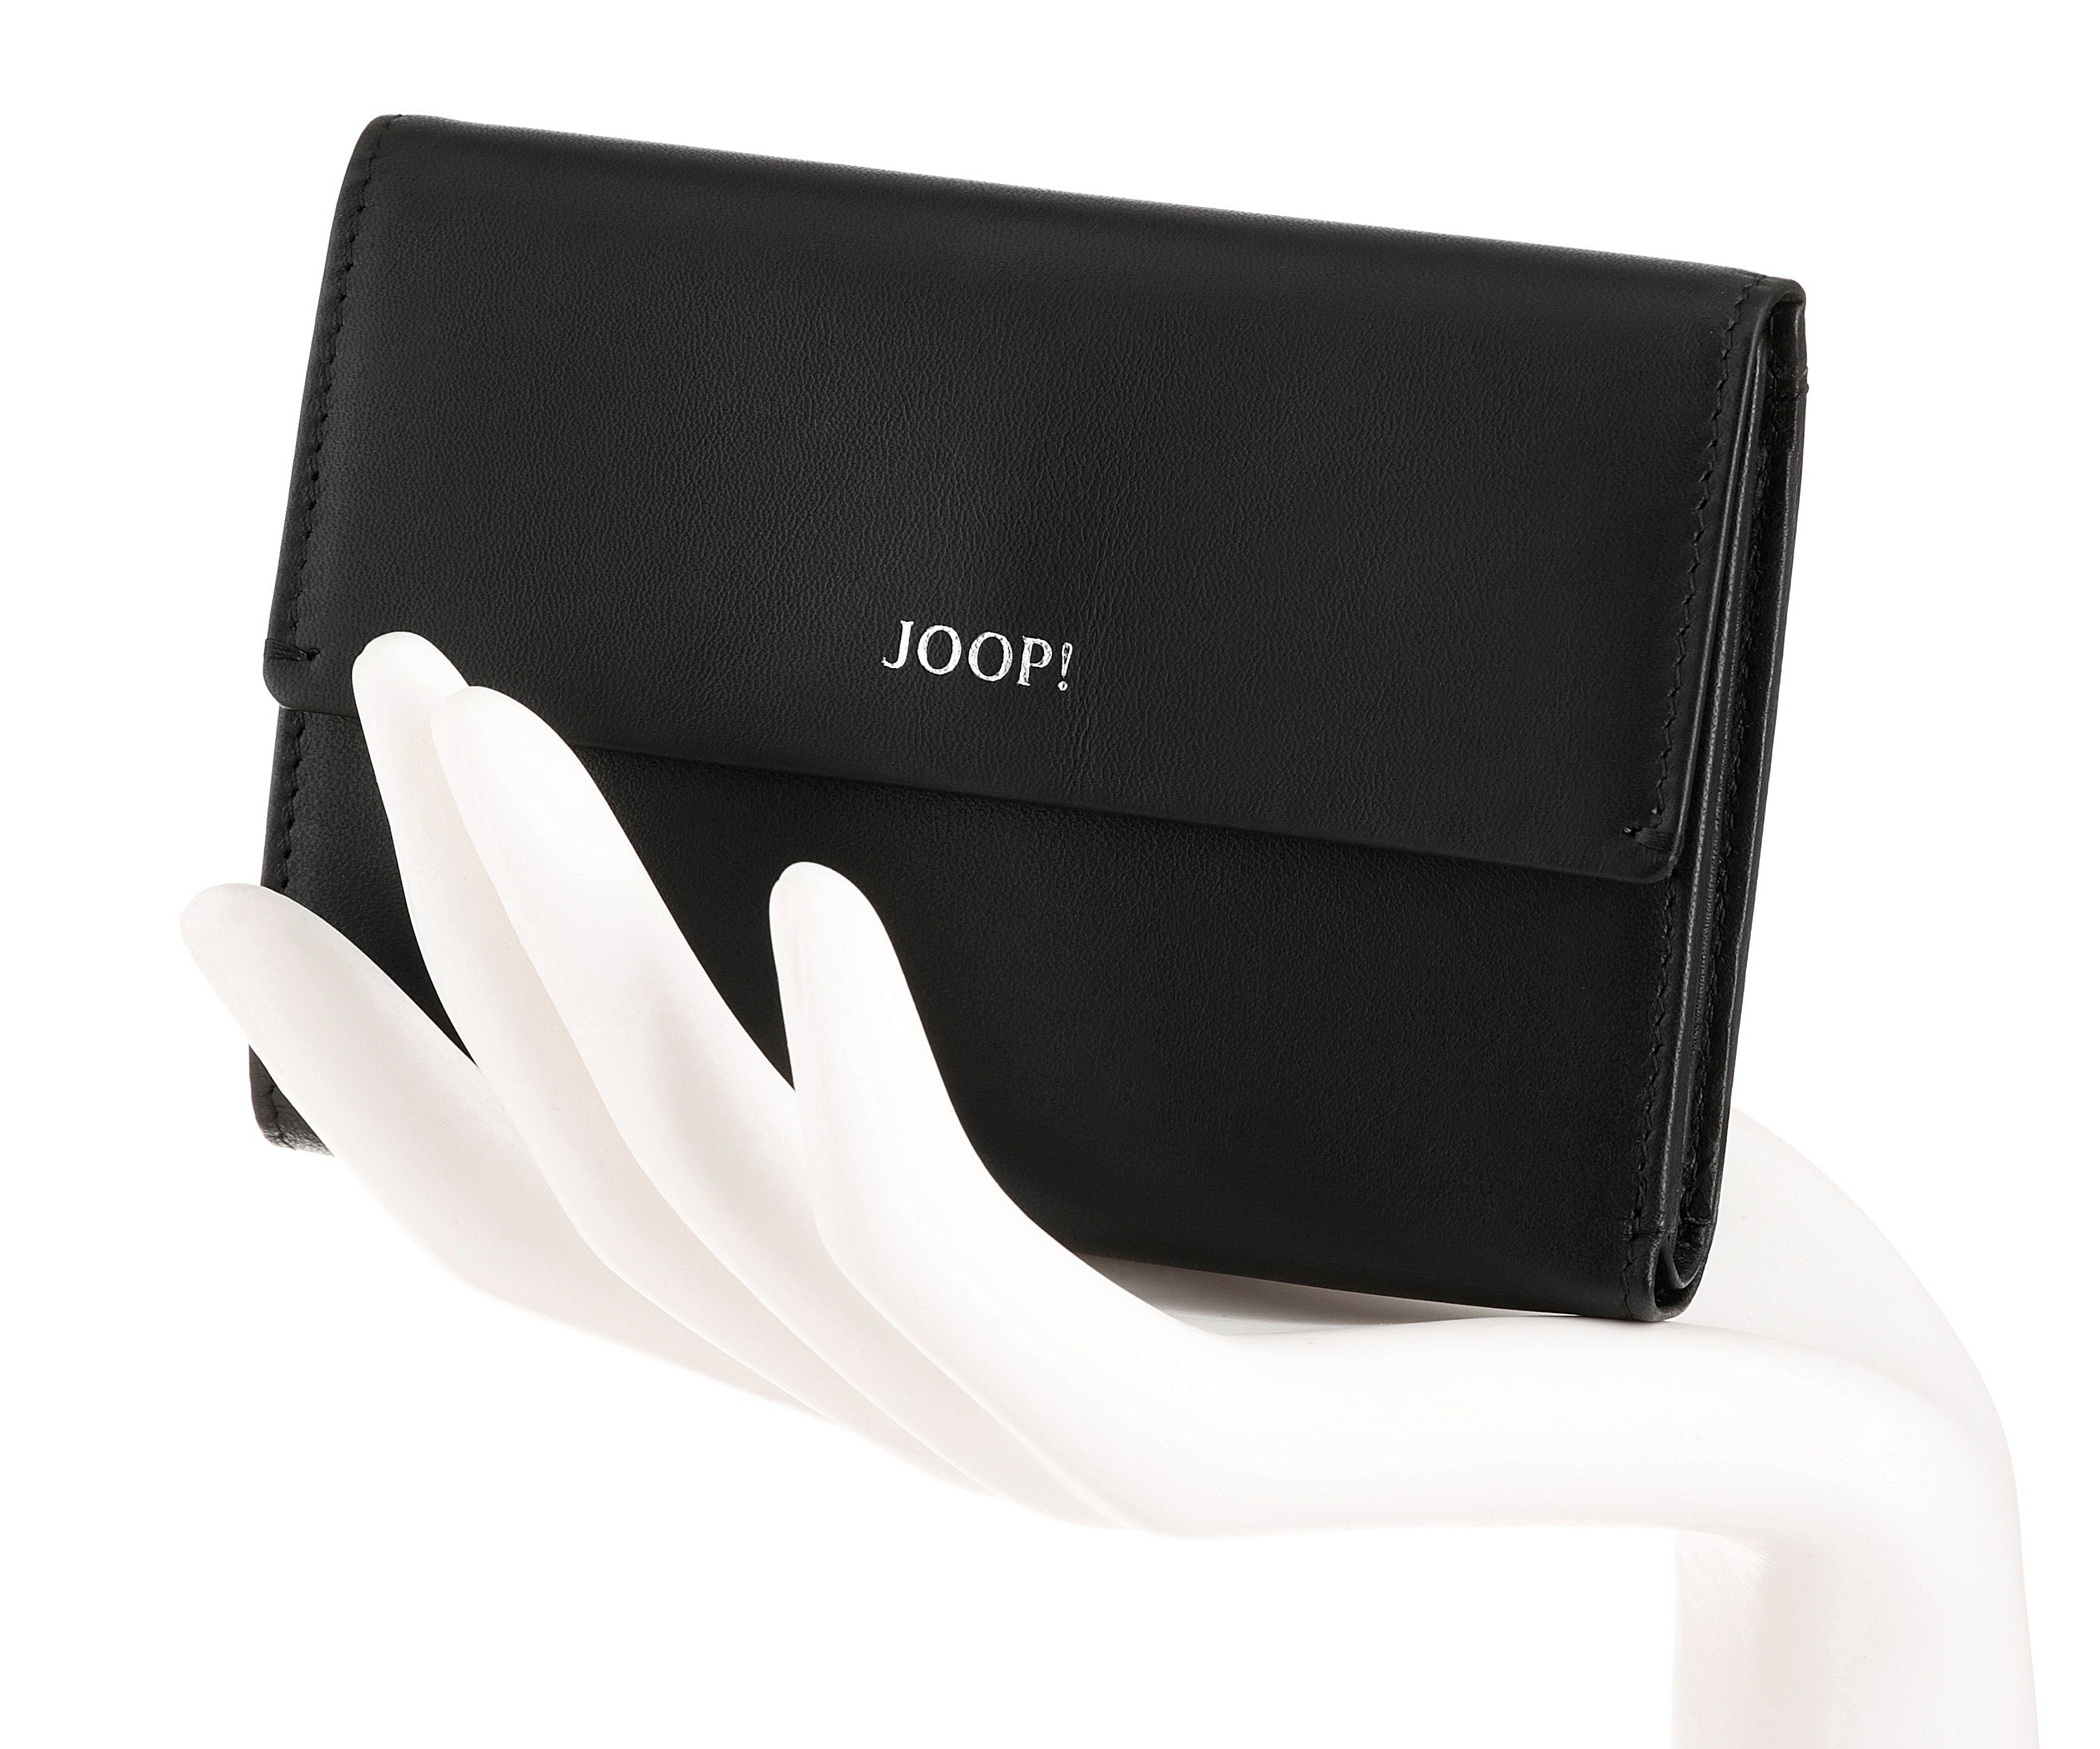 Joop! Geldbörse sofisticato cosma 1.0 black schlichtem in mh10f, Design purse